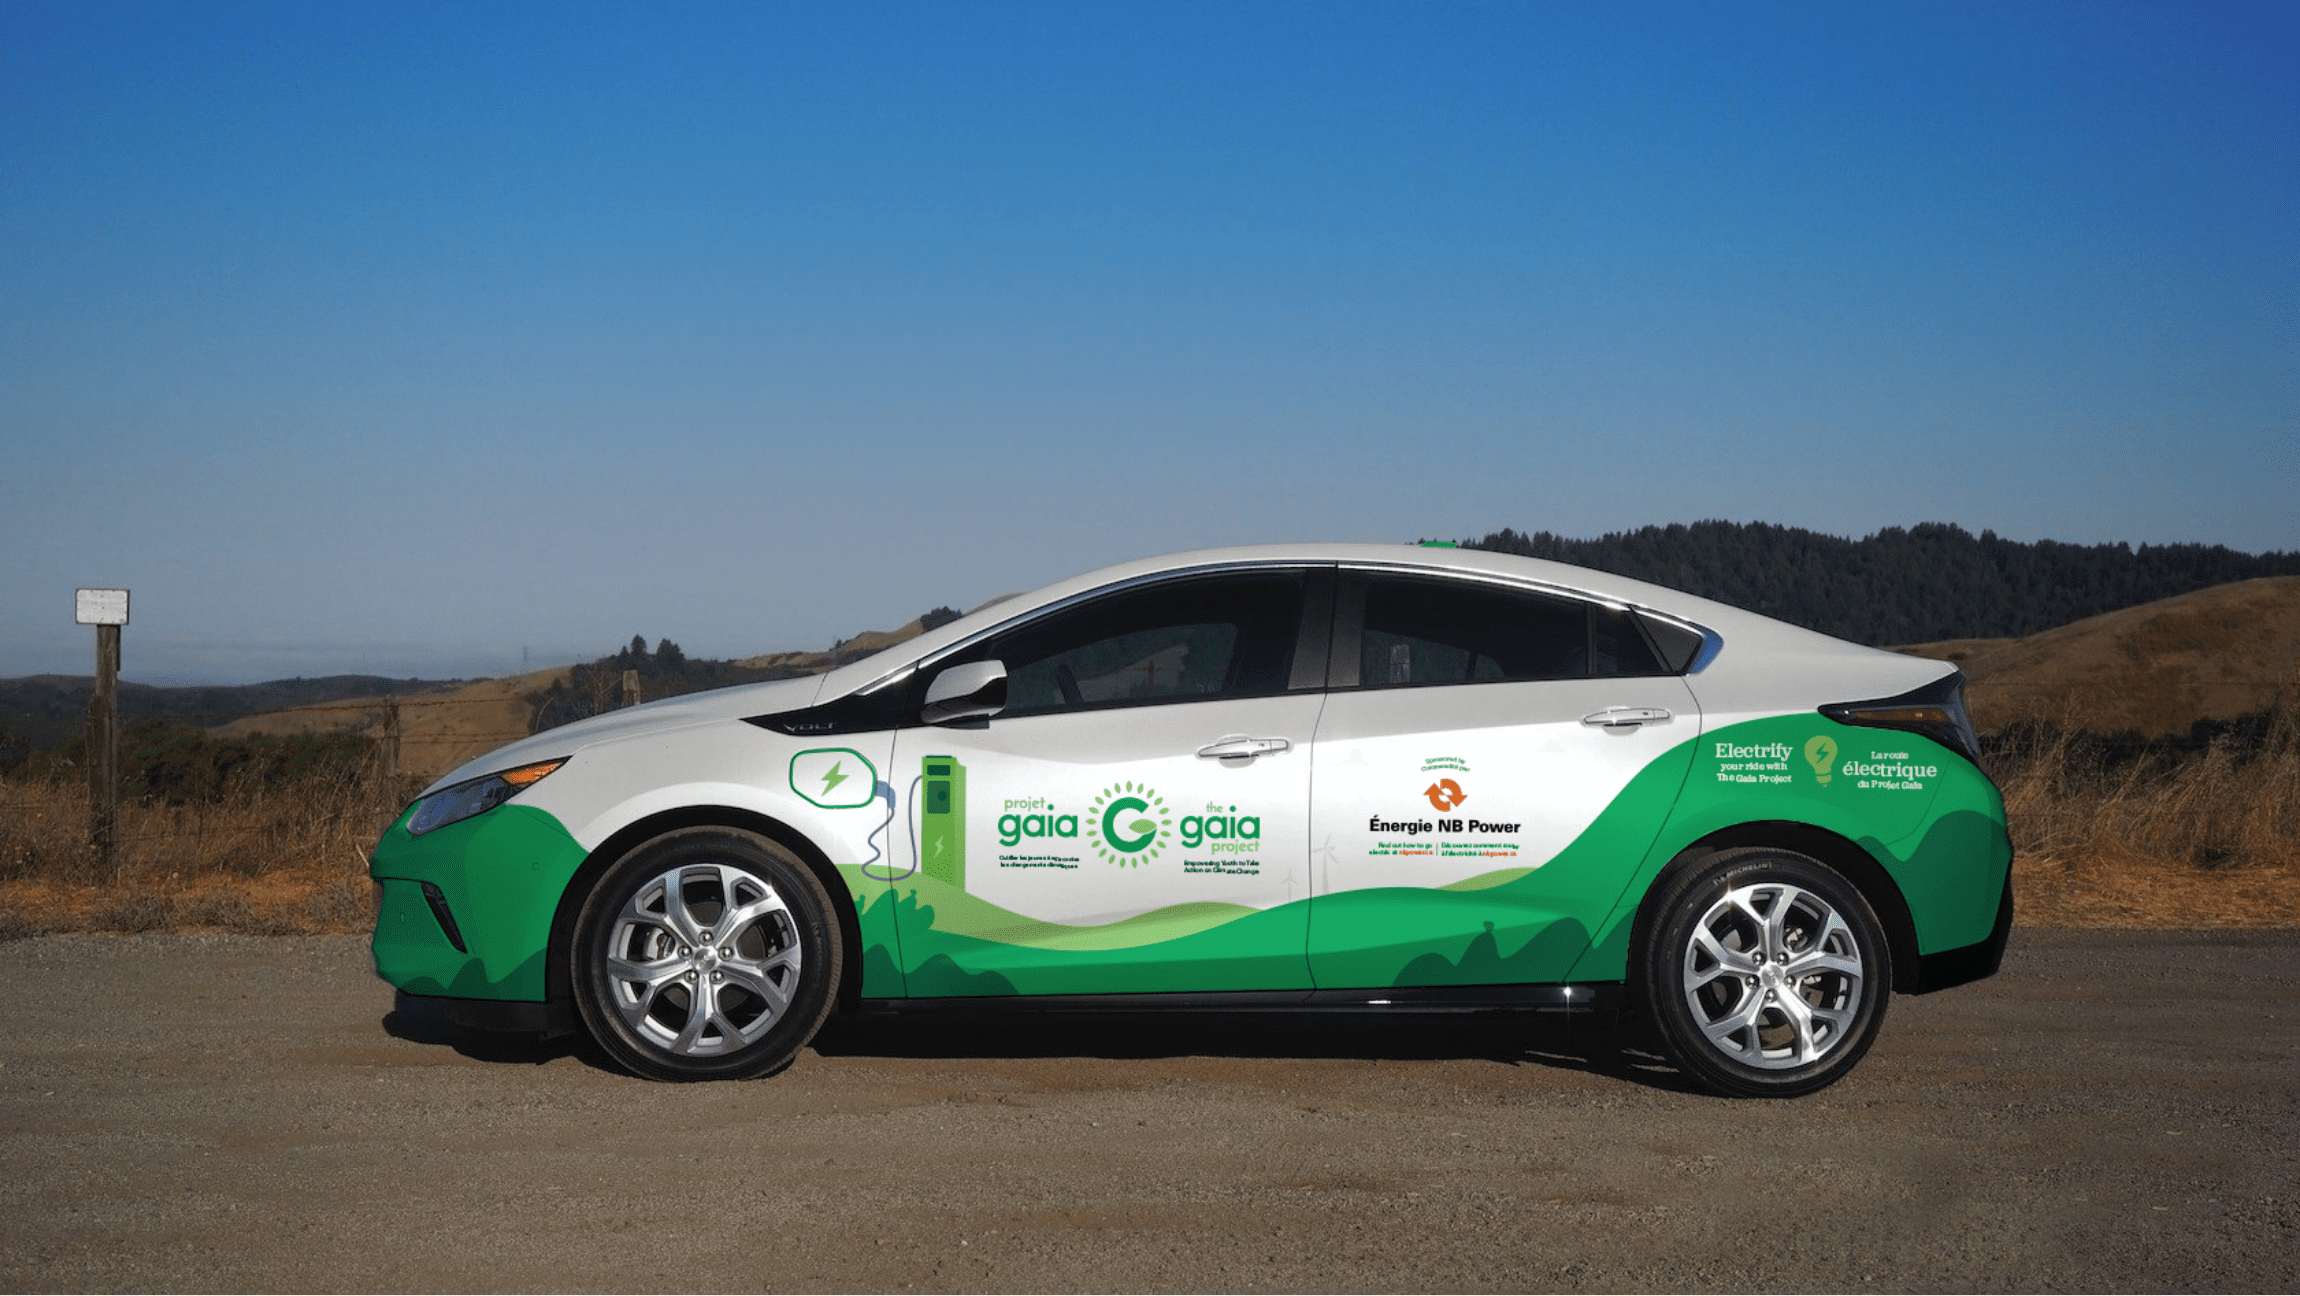 The Gaia Project car design